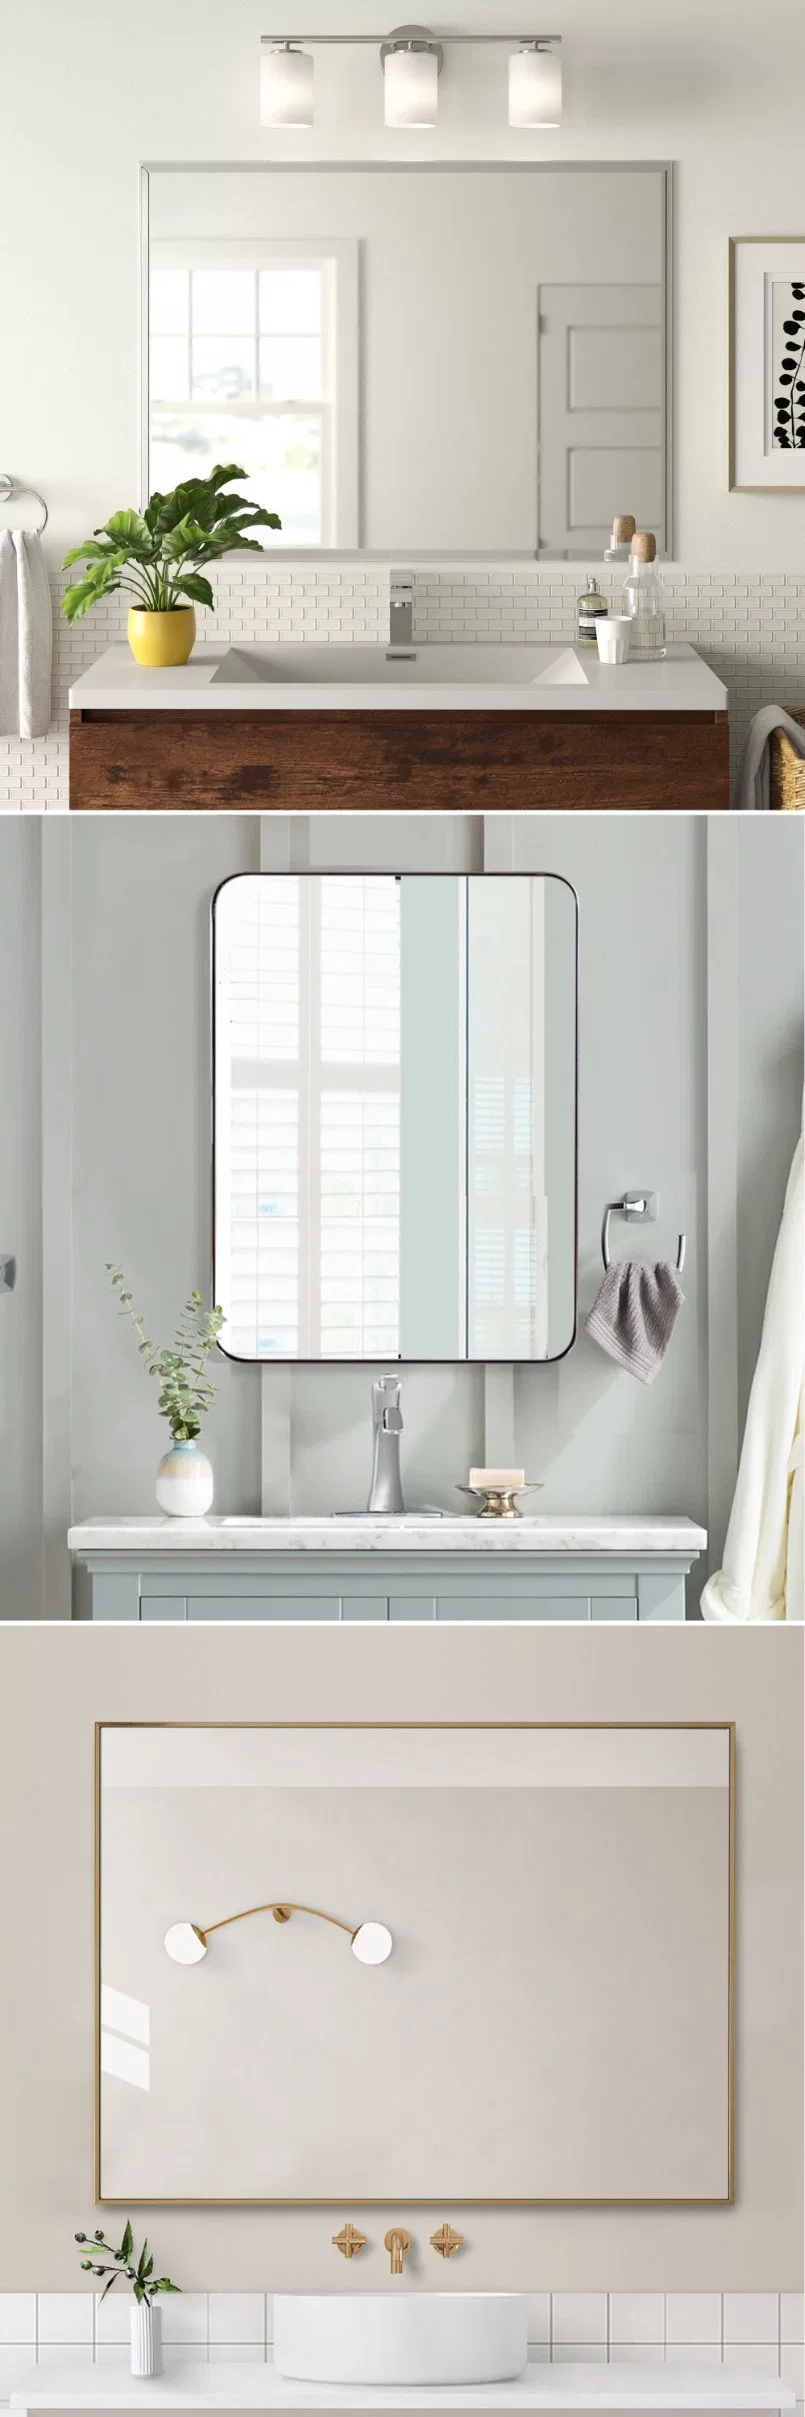 ORTONBATH Arch Gold Framed Home Smart Wall Mounted Nonled Mirror Decorative Bathroom Designer Art Bath Mirrors